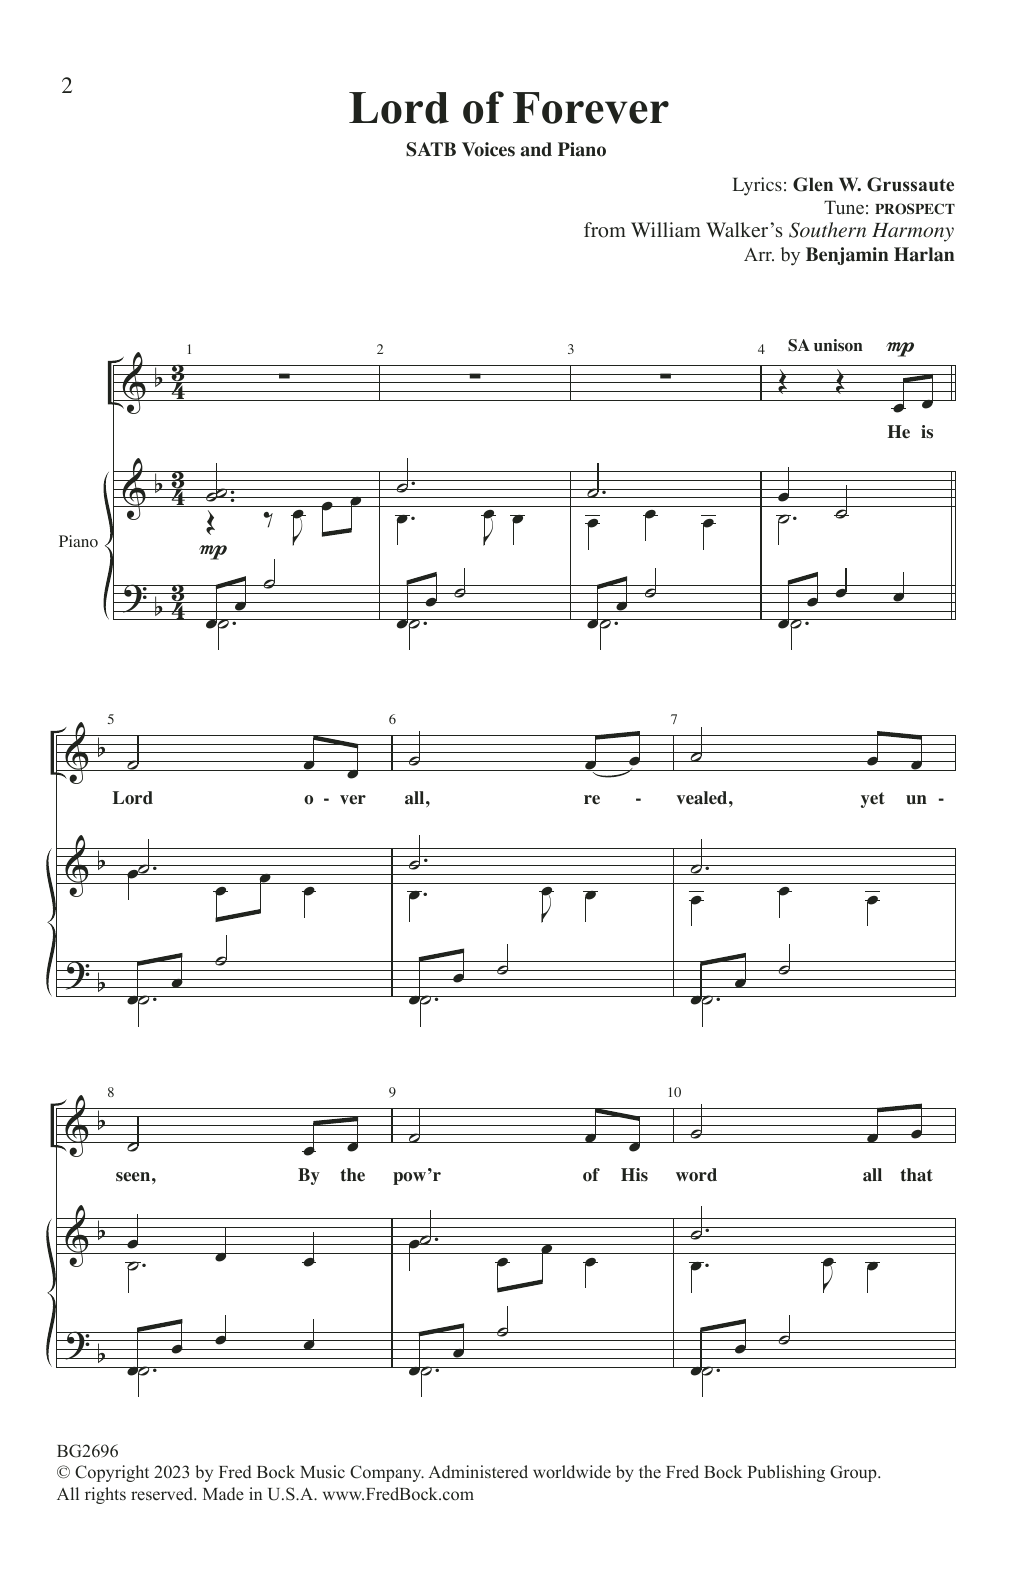 Benjamin Harlan Lord of Forever Sheet Music Notes & Chords for SATB Choir - Download or Print PDF